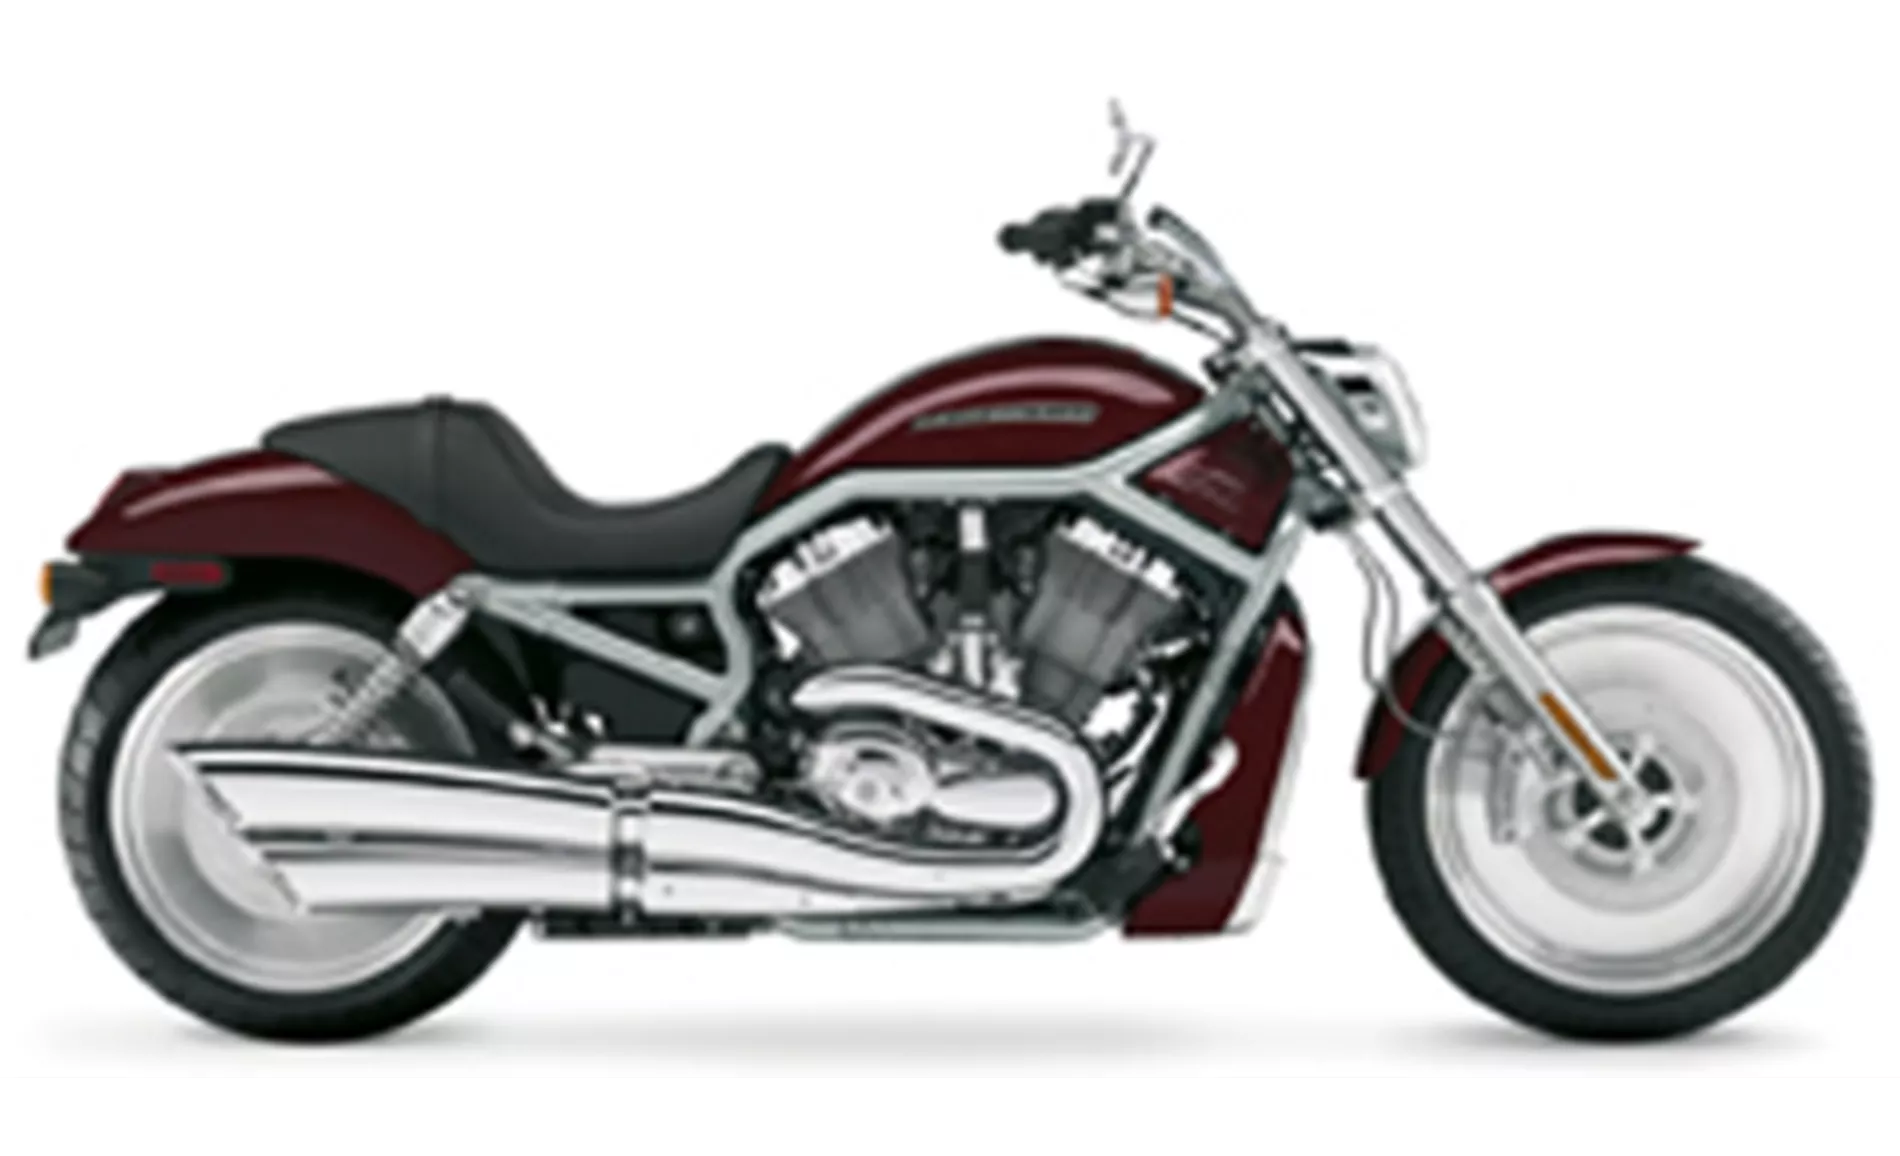 Harley-Davidson V-Rod VRSCA 2006